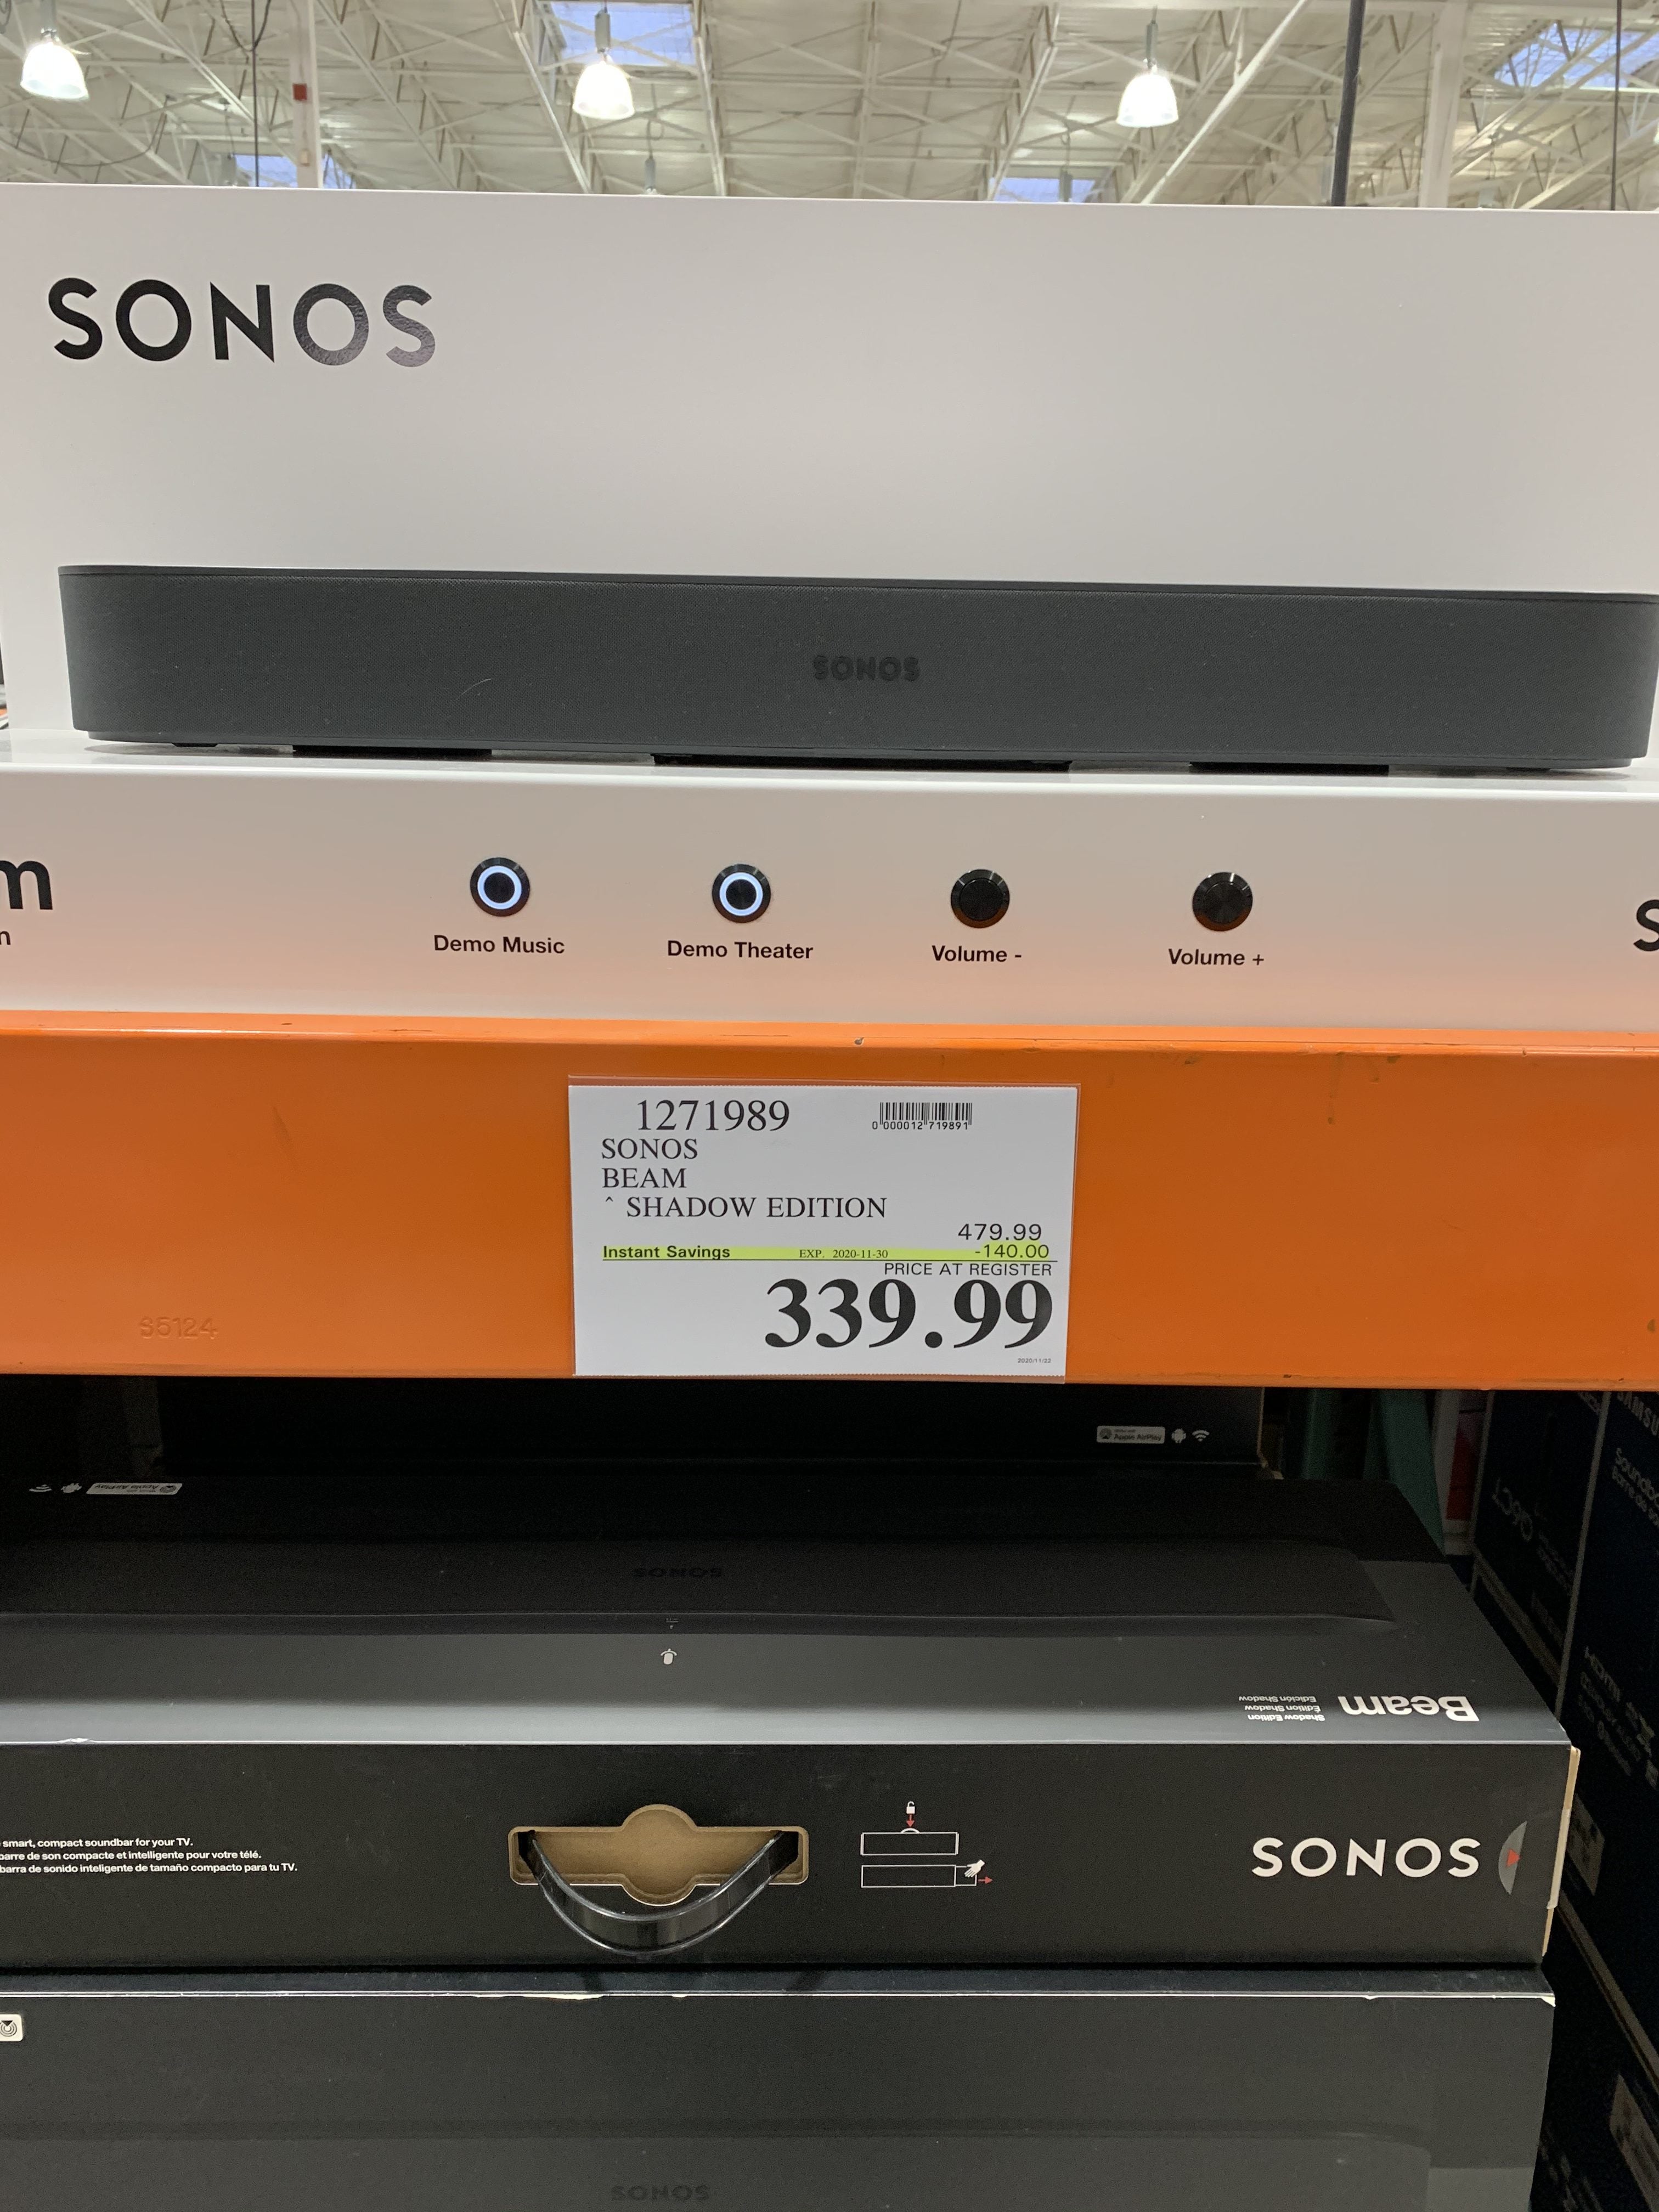 Costco] Sonos Beam Shadow $339.99 in-store - RedFlagDeals.com Forums